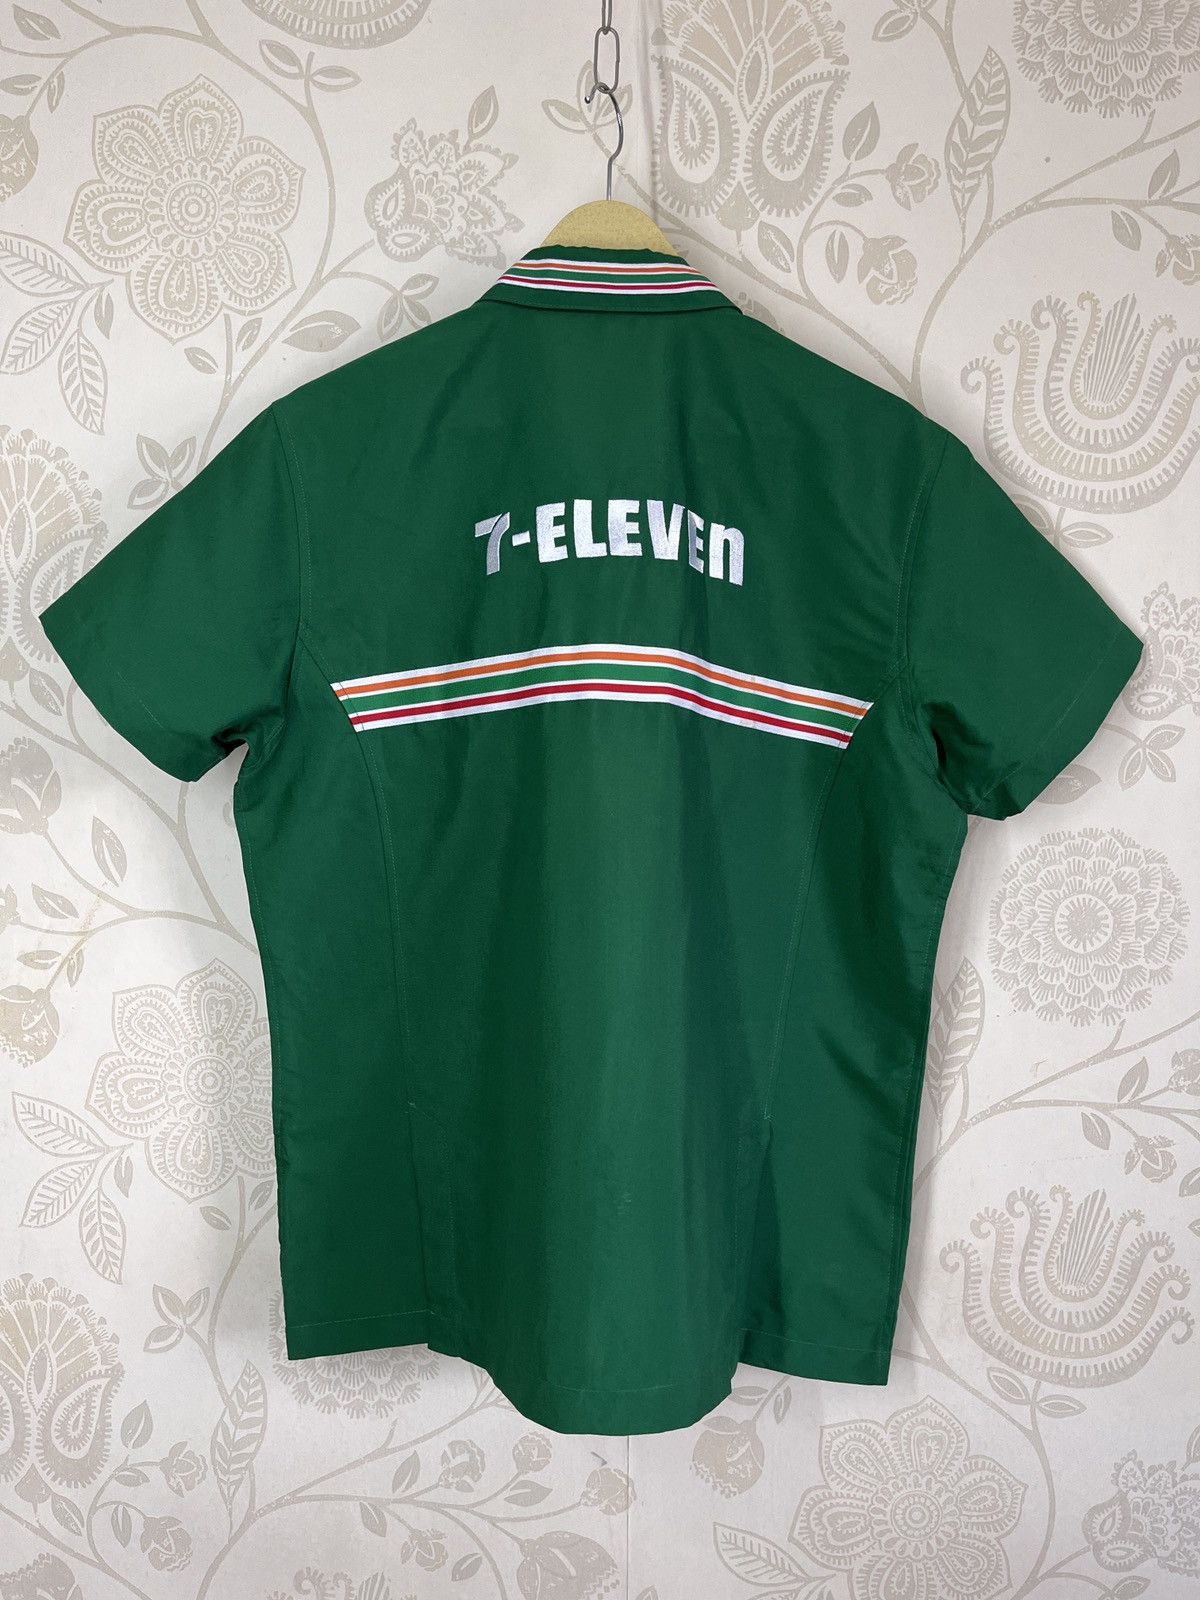 7-Eleven Uniform Japan Stores Vintage Full Zipped - 18